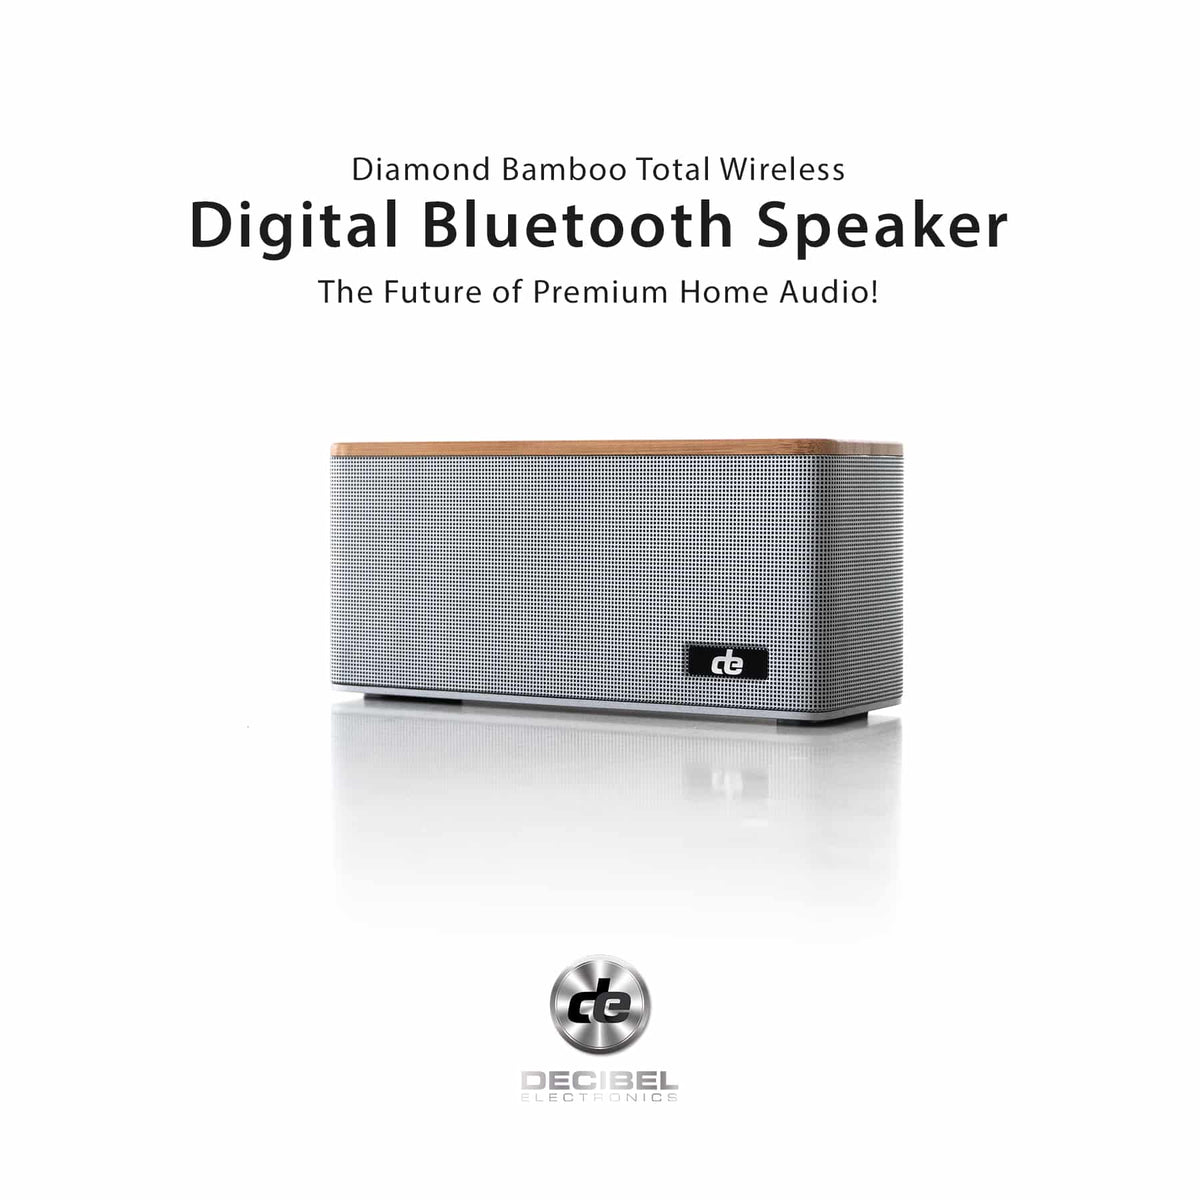 dBtechnologies MINIBOX-K300 2-Way Active Speaker – Sonic Circus